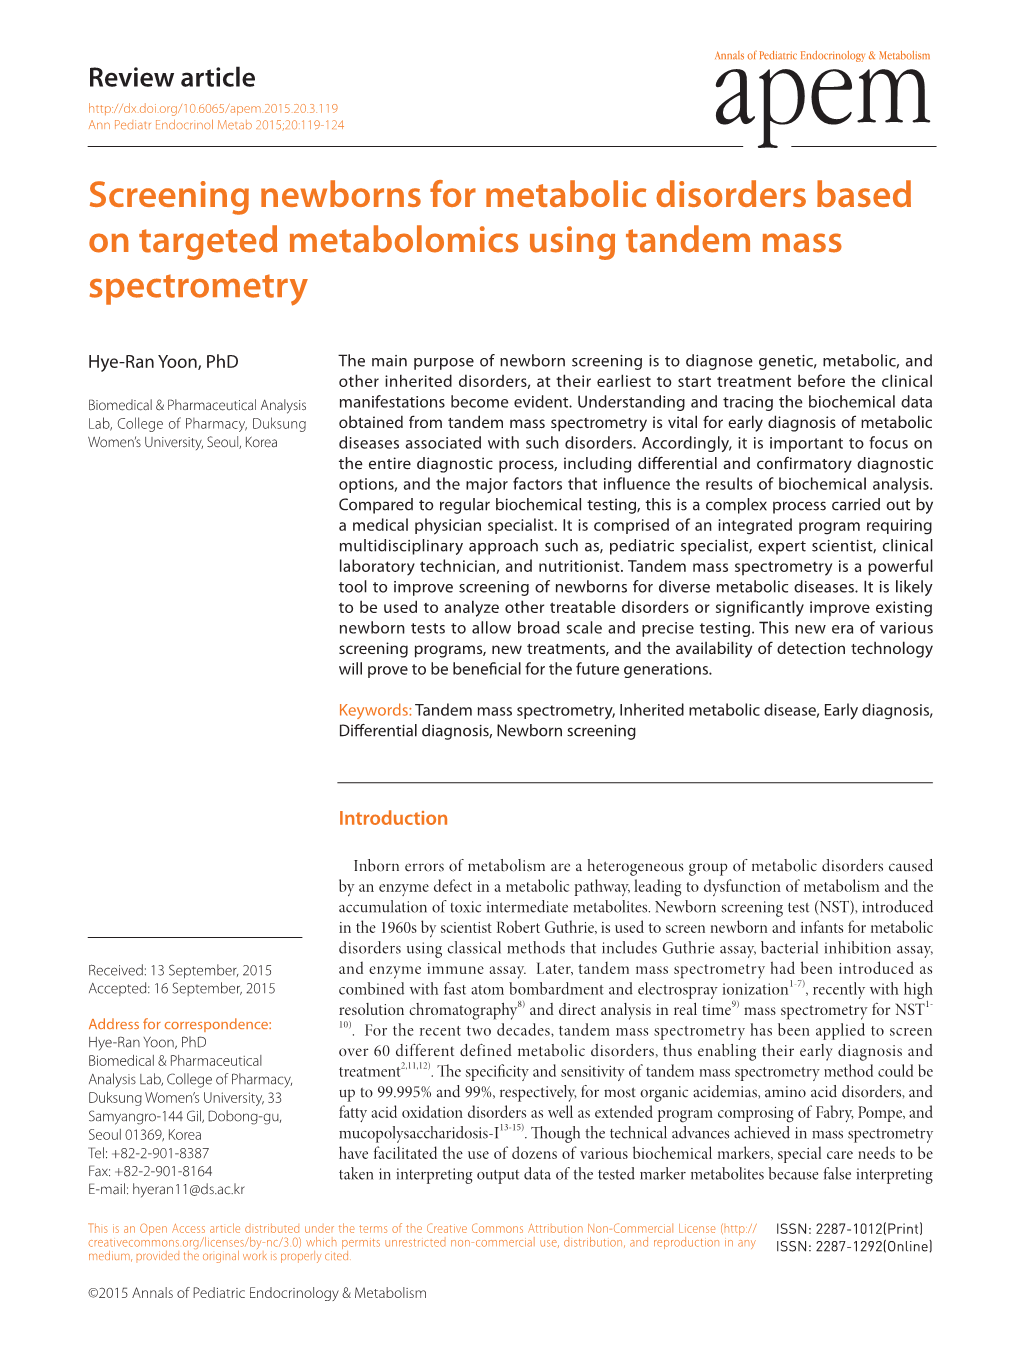 Screening Newborns for Metabolic Disorders Based on Targeted Metabolomics Using Tandem Mass Spectrometry